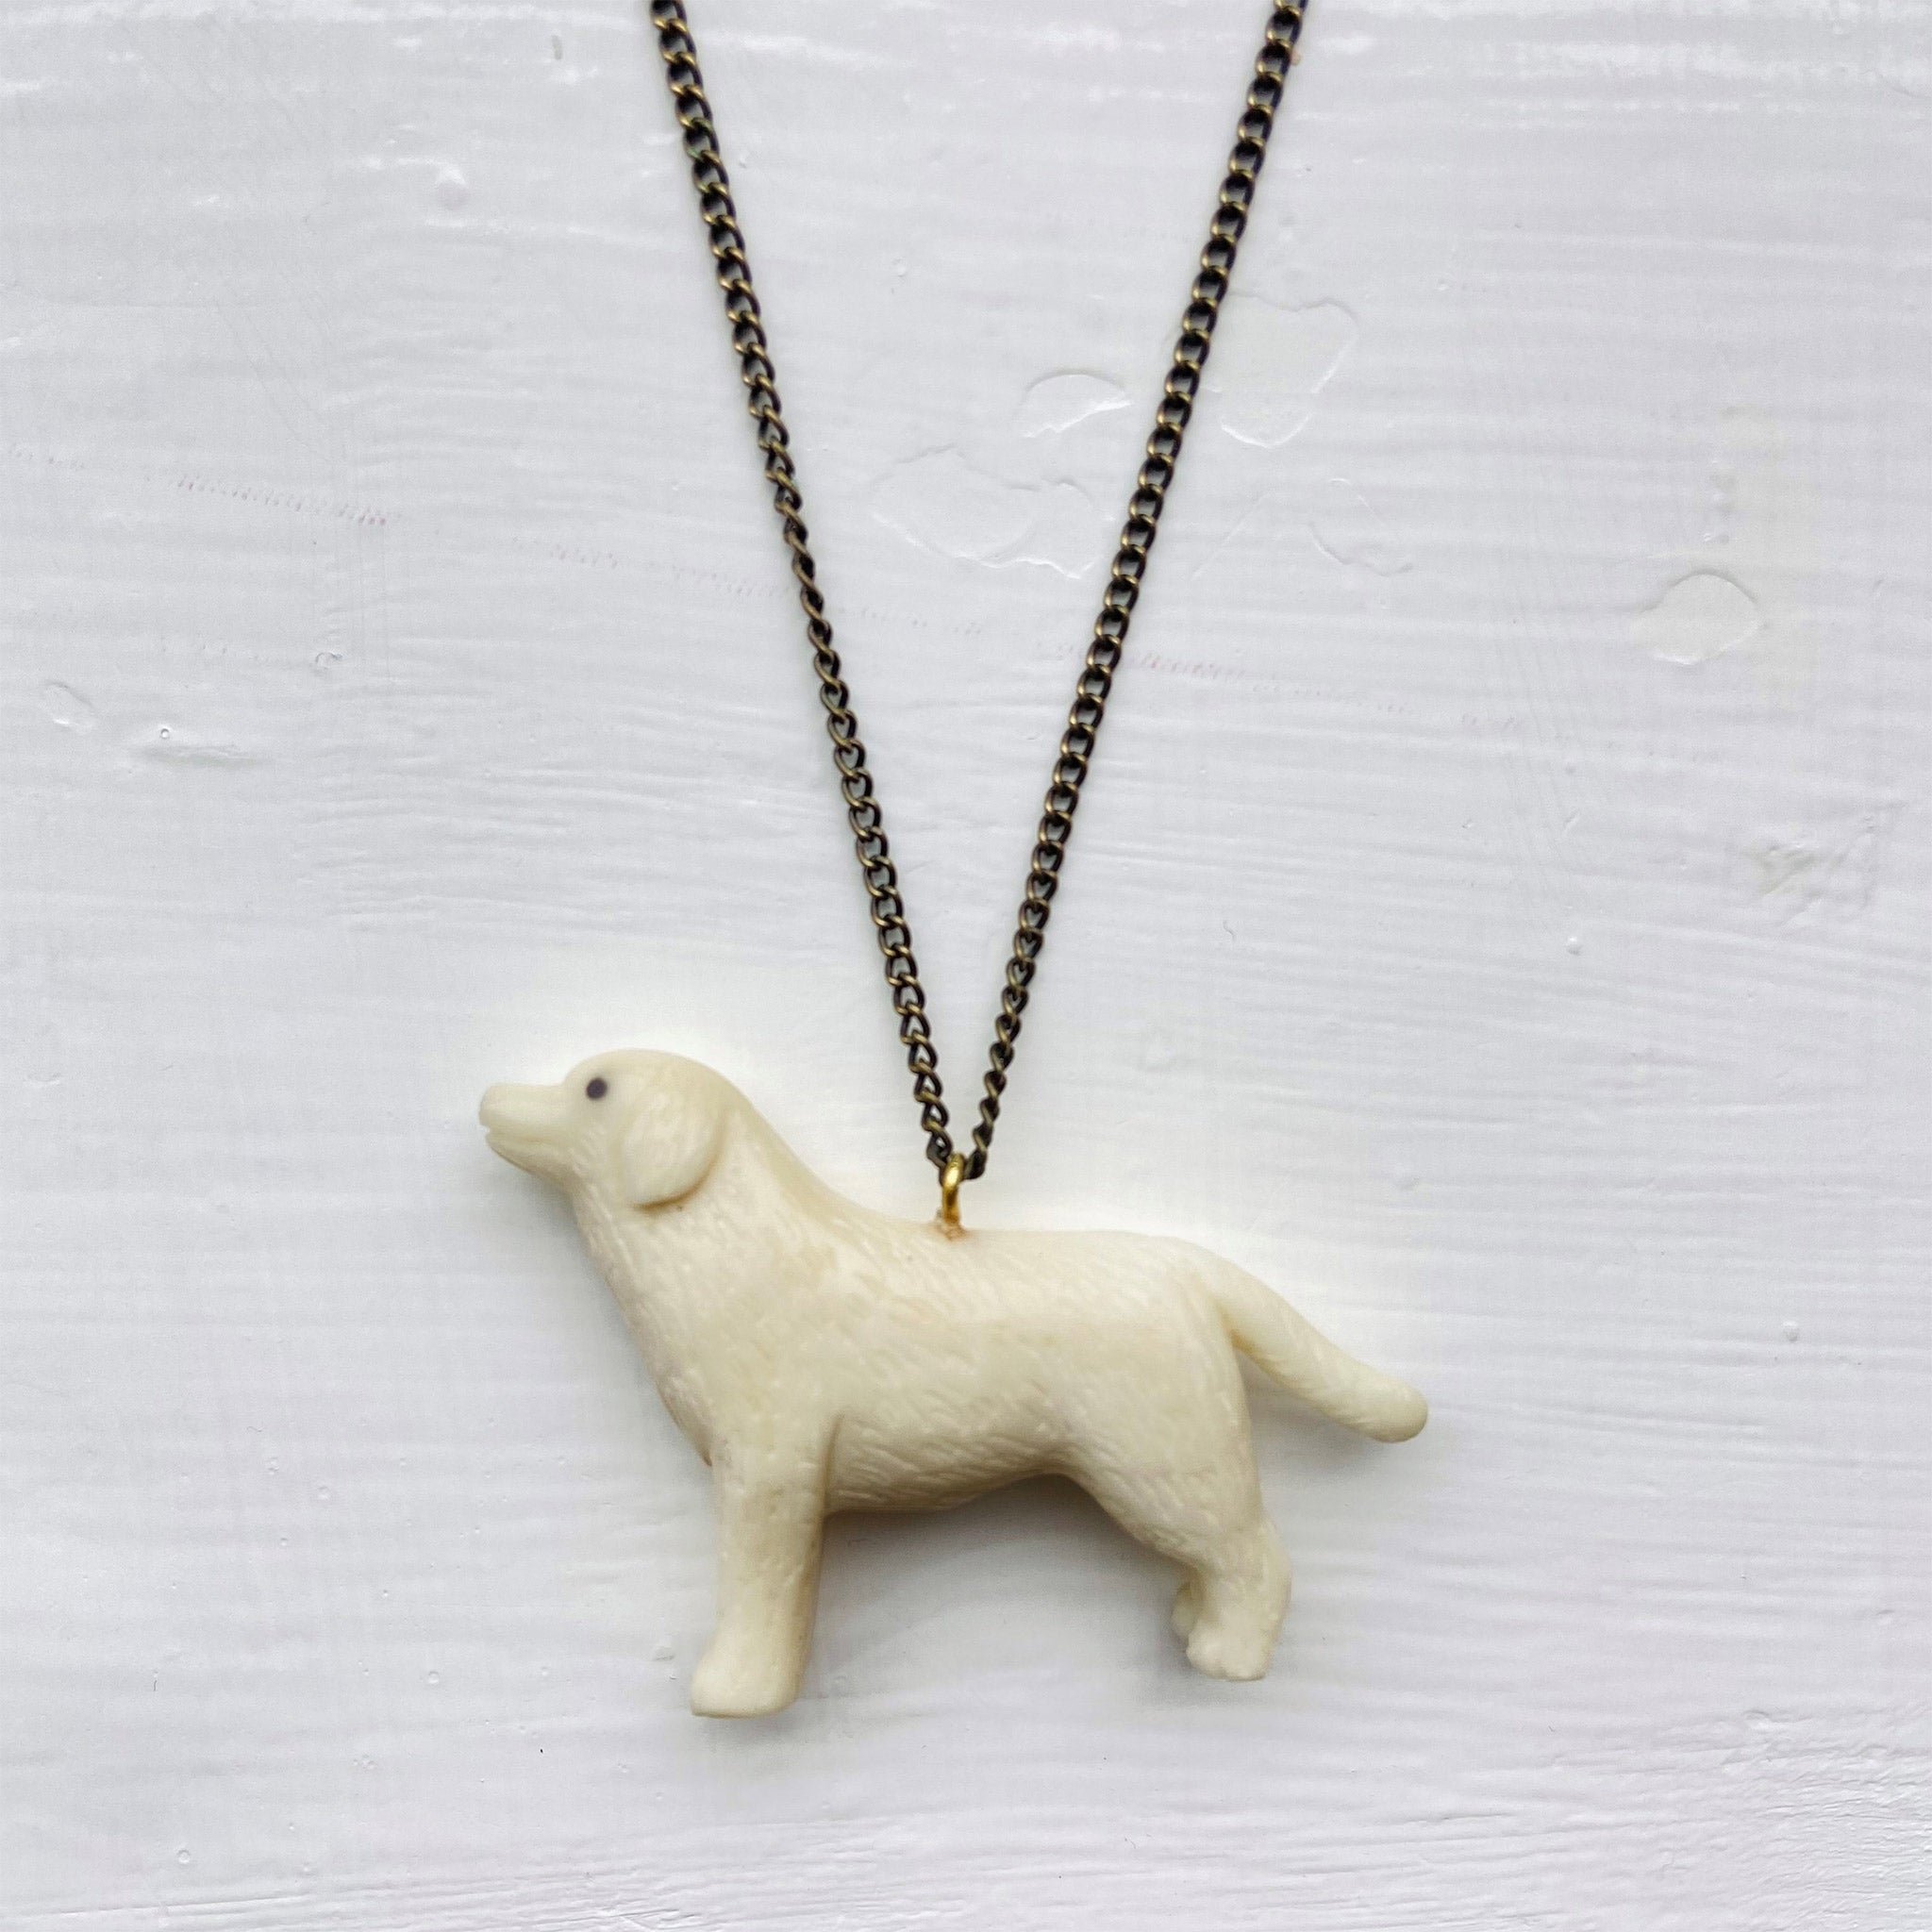 A Labrador shaped pendant on a dark chain.